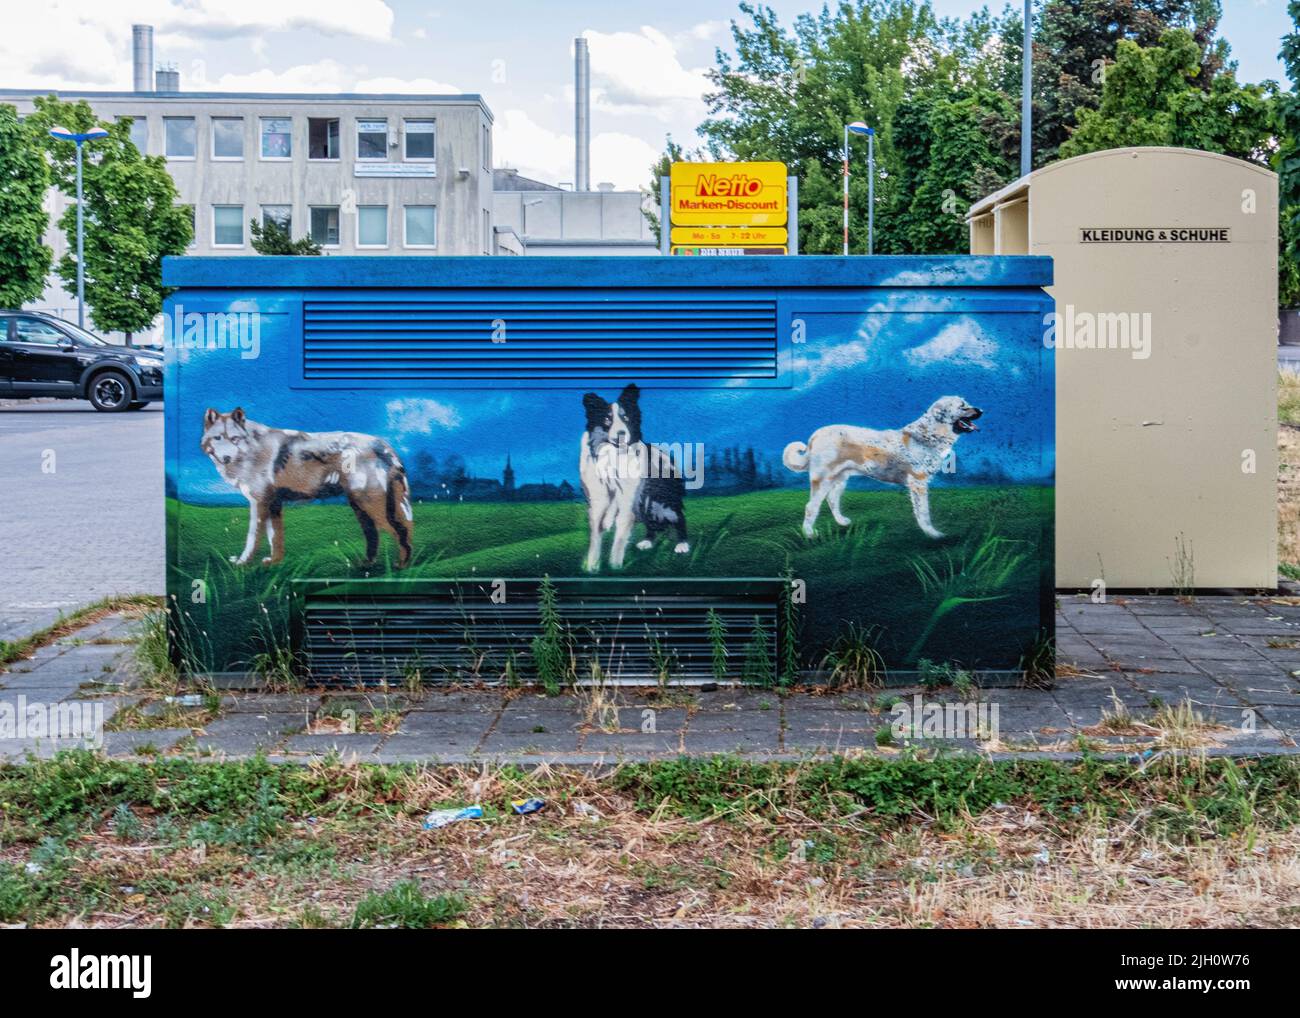 Arte urbano, pintura de perros en caja de servicio en Stubenrauchstrasse, Rudow, Neukölln, Berlín, Alemania Foto de stock